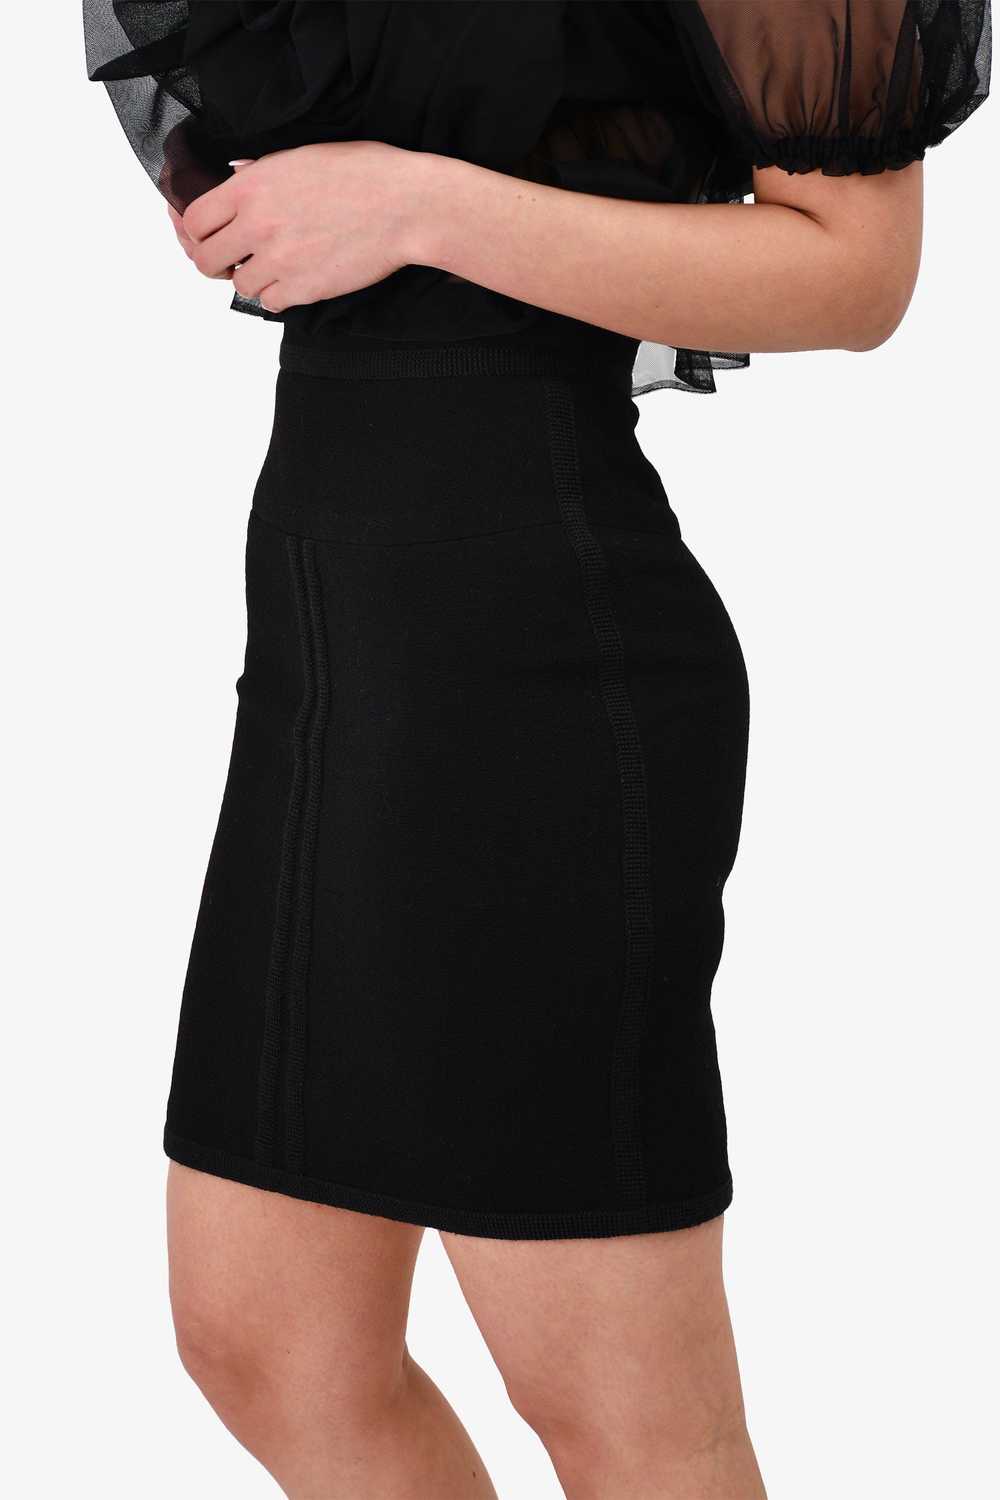 Pre-Loved Chanel™ Black Wool Knee Length Skirt Si… - image 2